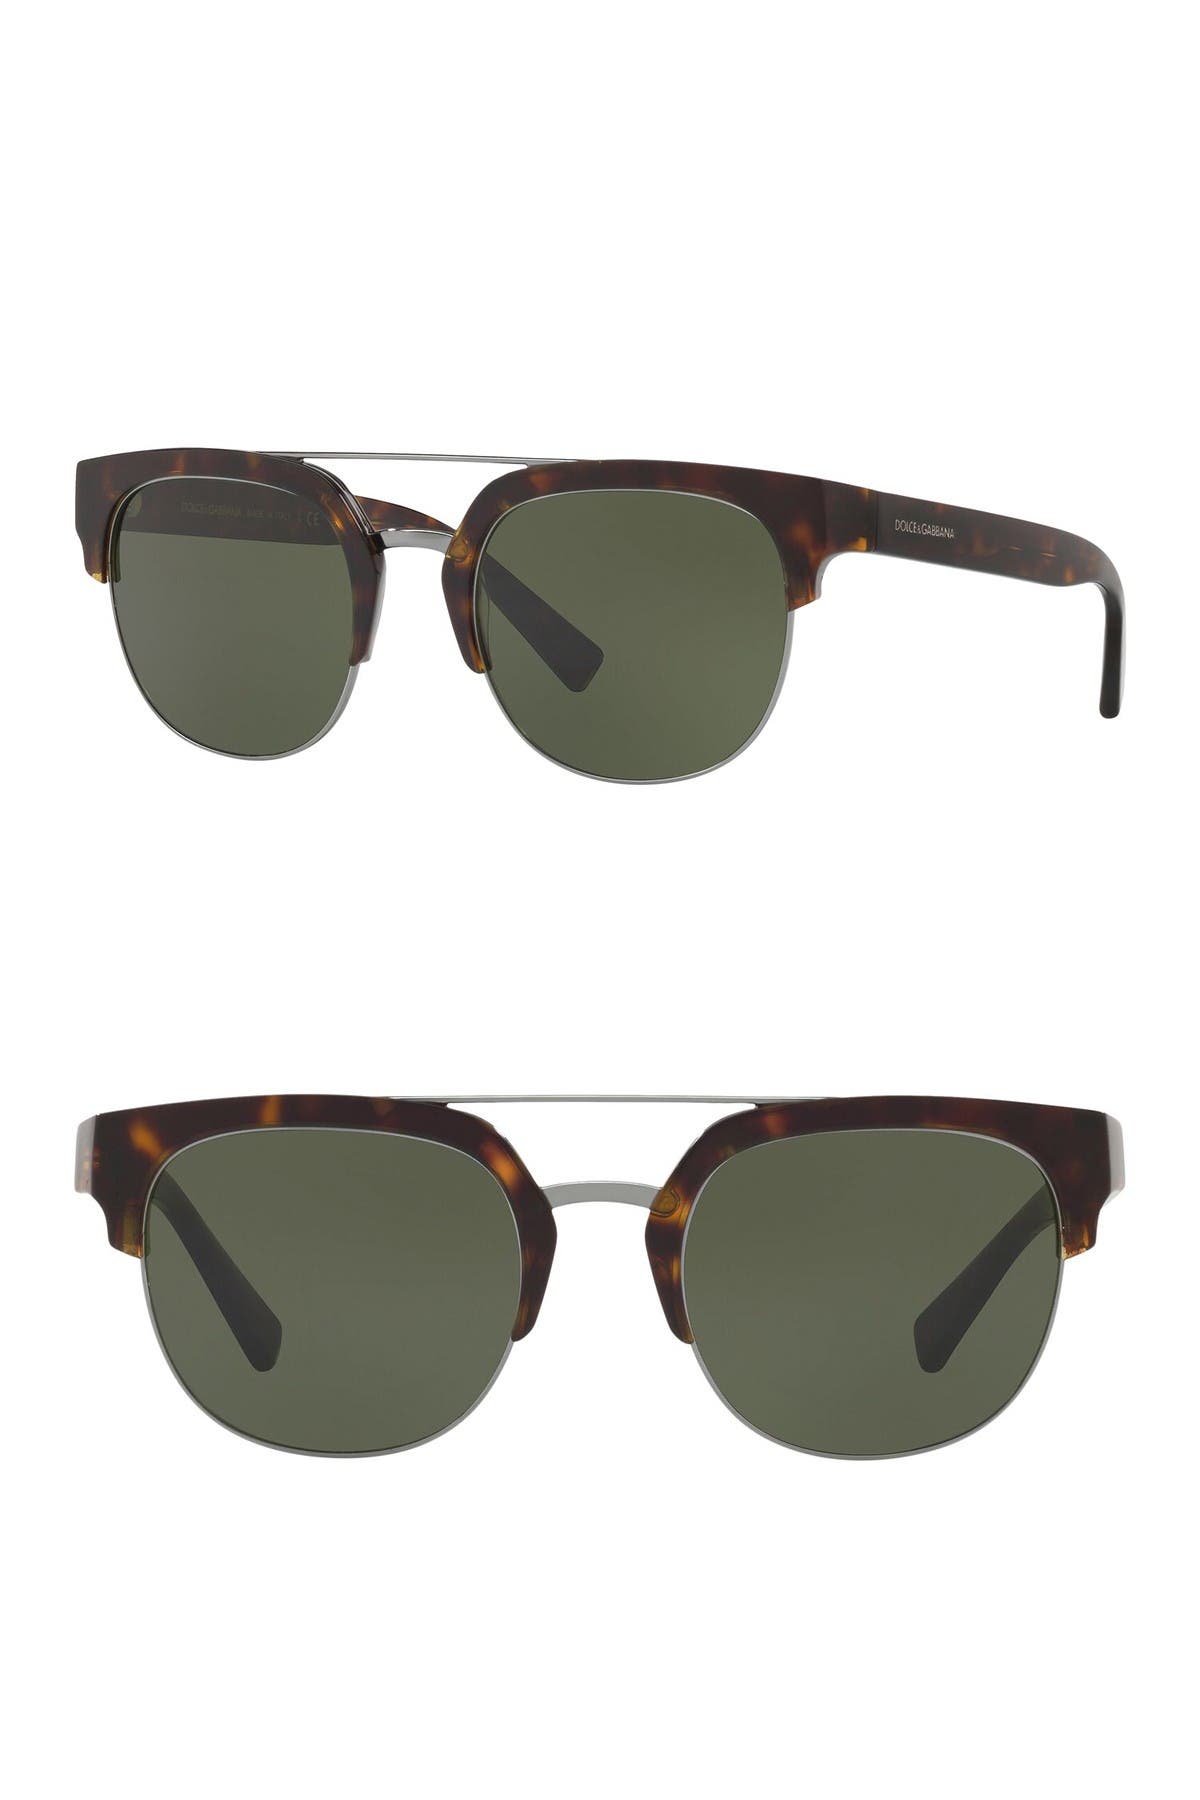 dolce & gabbana 53mm clubmaster sunglasses